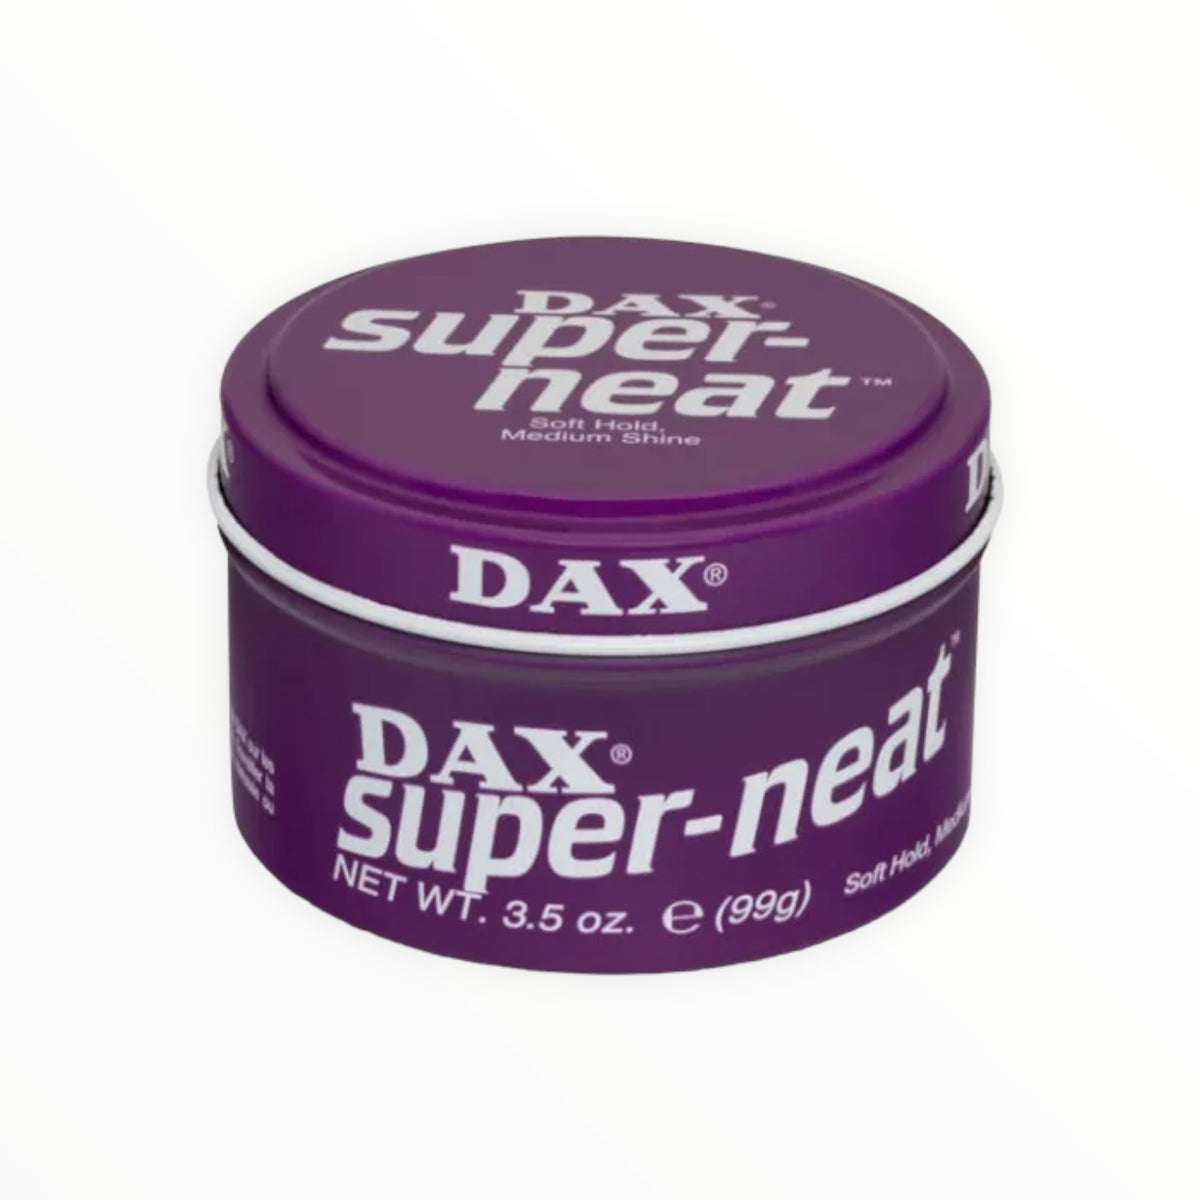 Dax Super Neat 99gr